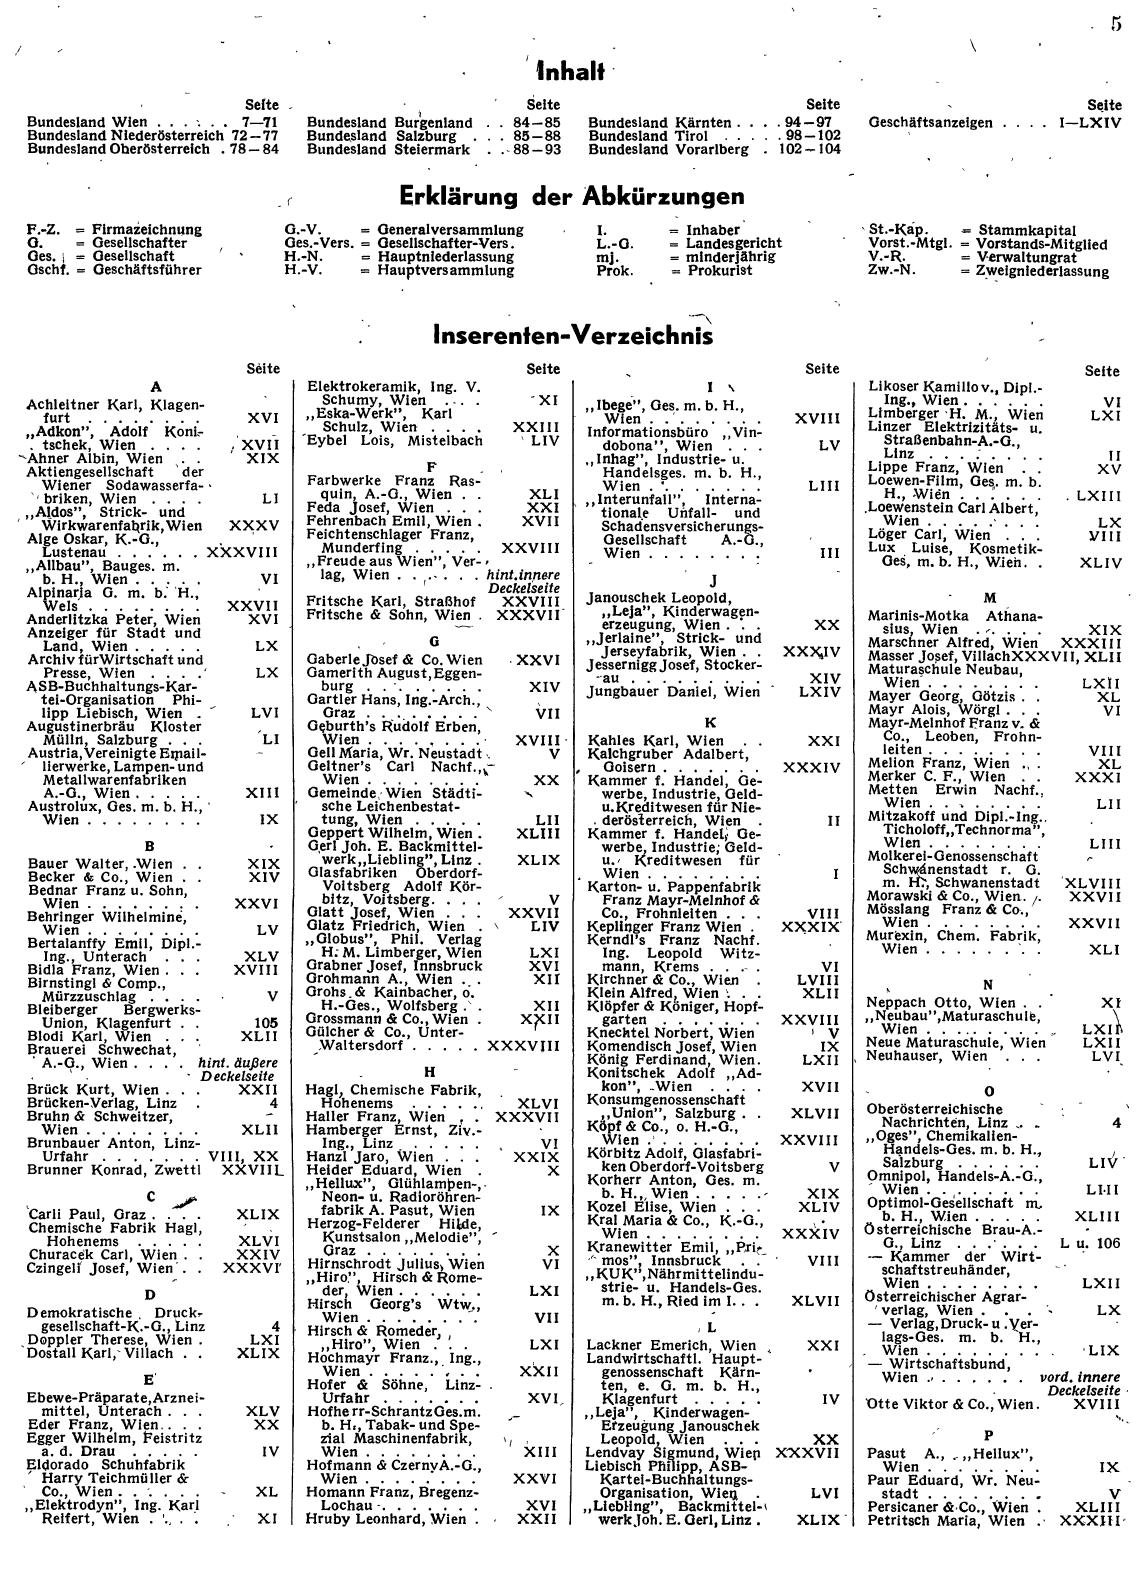 Zentralblatt Geheim 1943-45 - Page 7